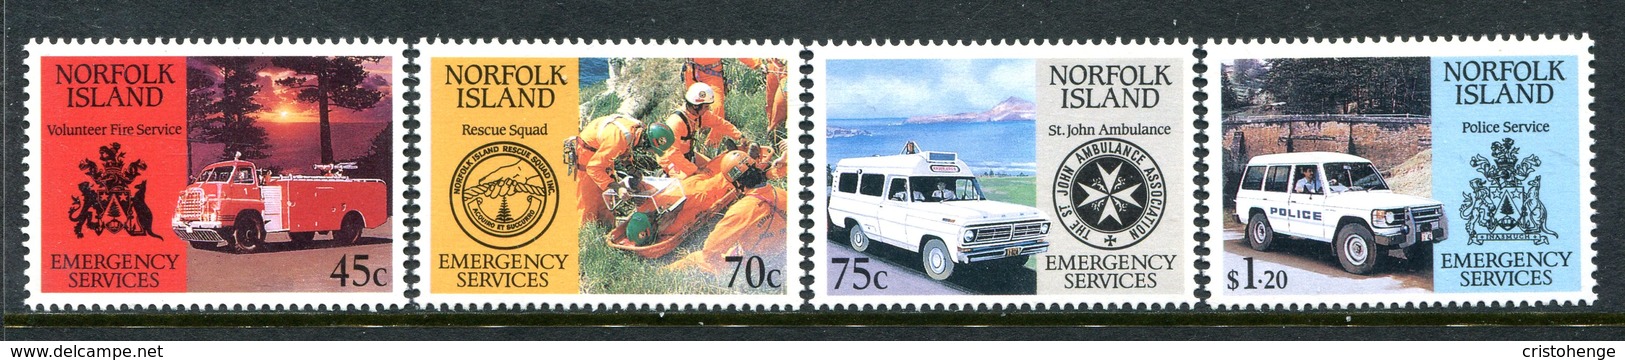 Norfolk Island 1993 Emergency Services Set MNH (SG 546-549) - Norfolk Island